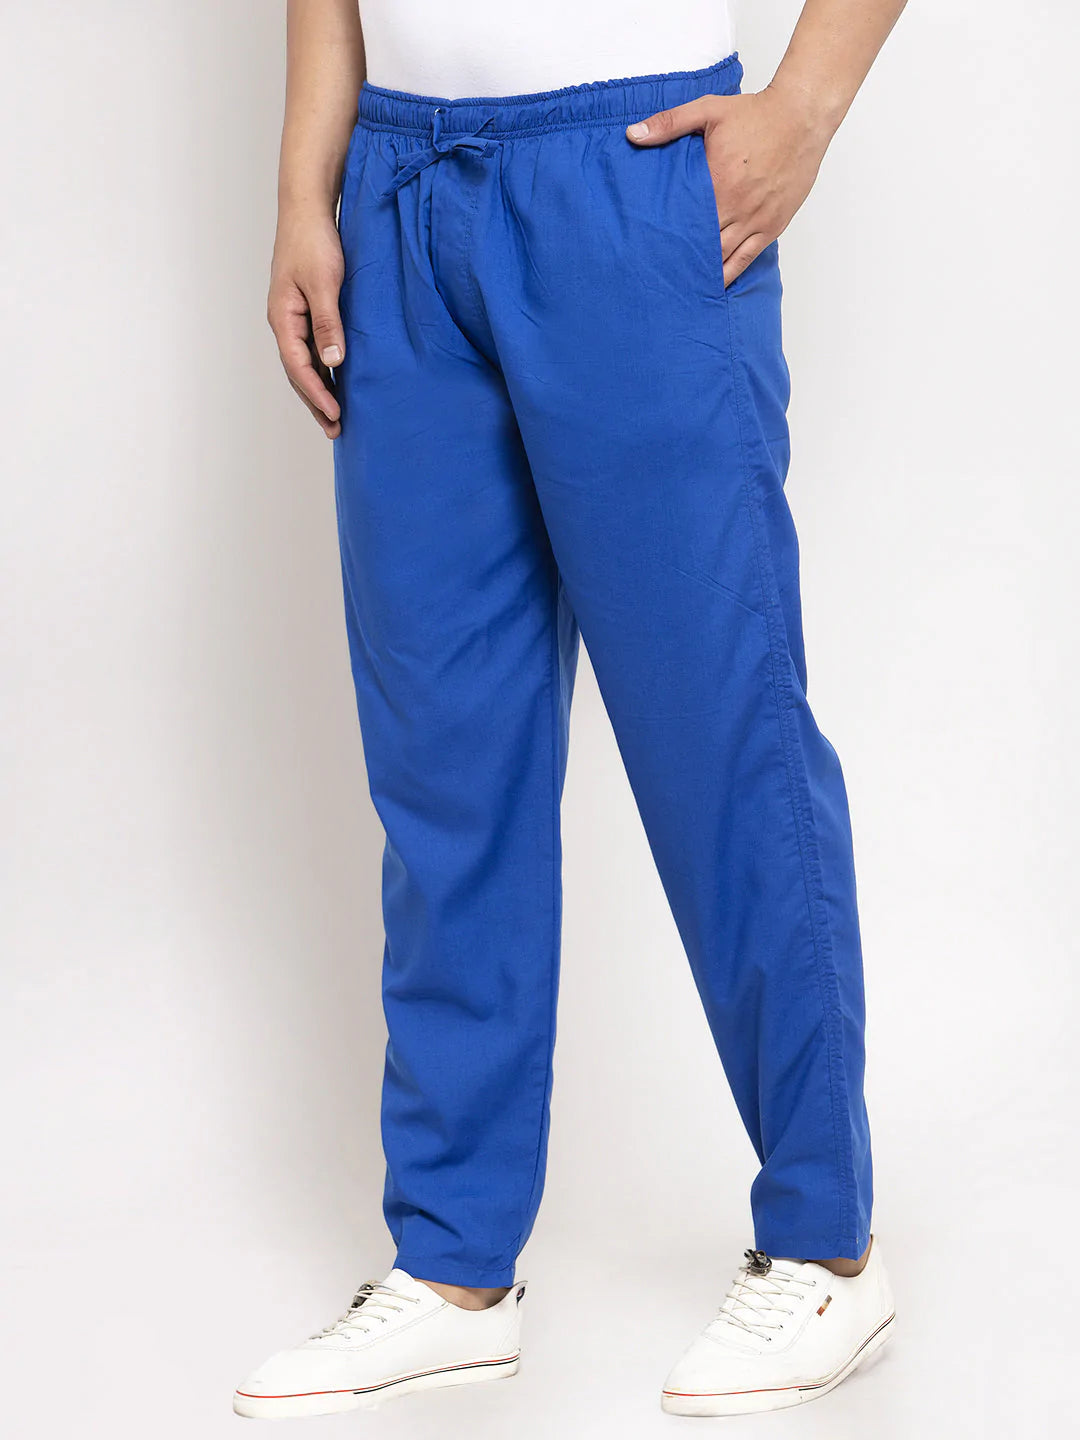 Jainish Men's Blue Solid Cotton Track Pants ( JOG 011Royal-Blue )